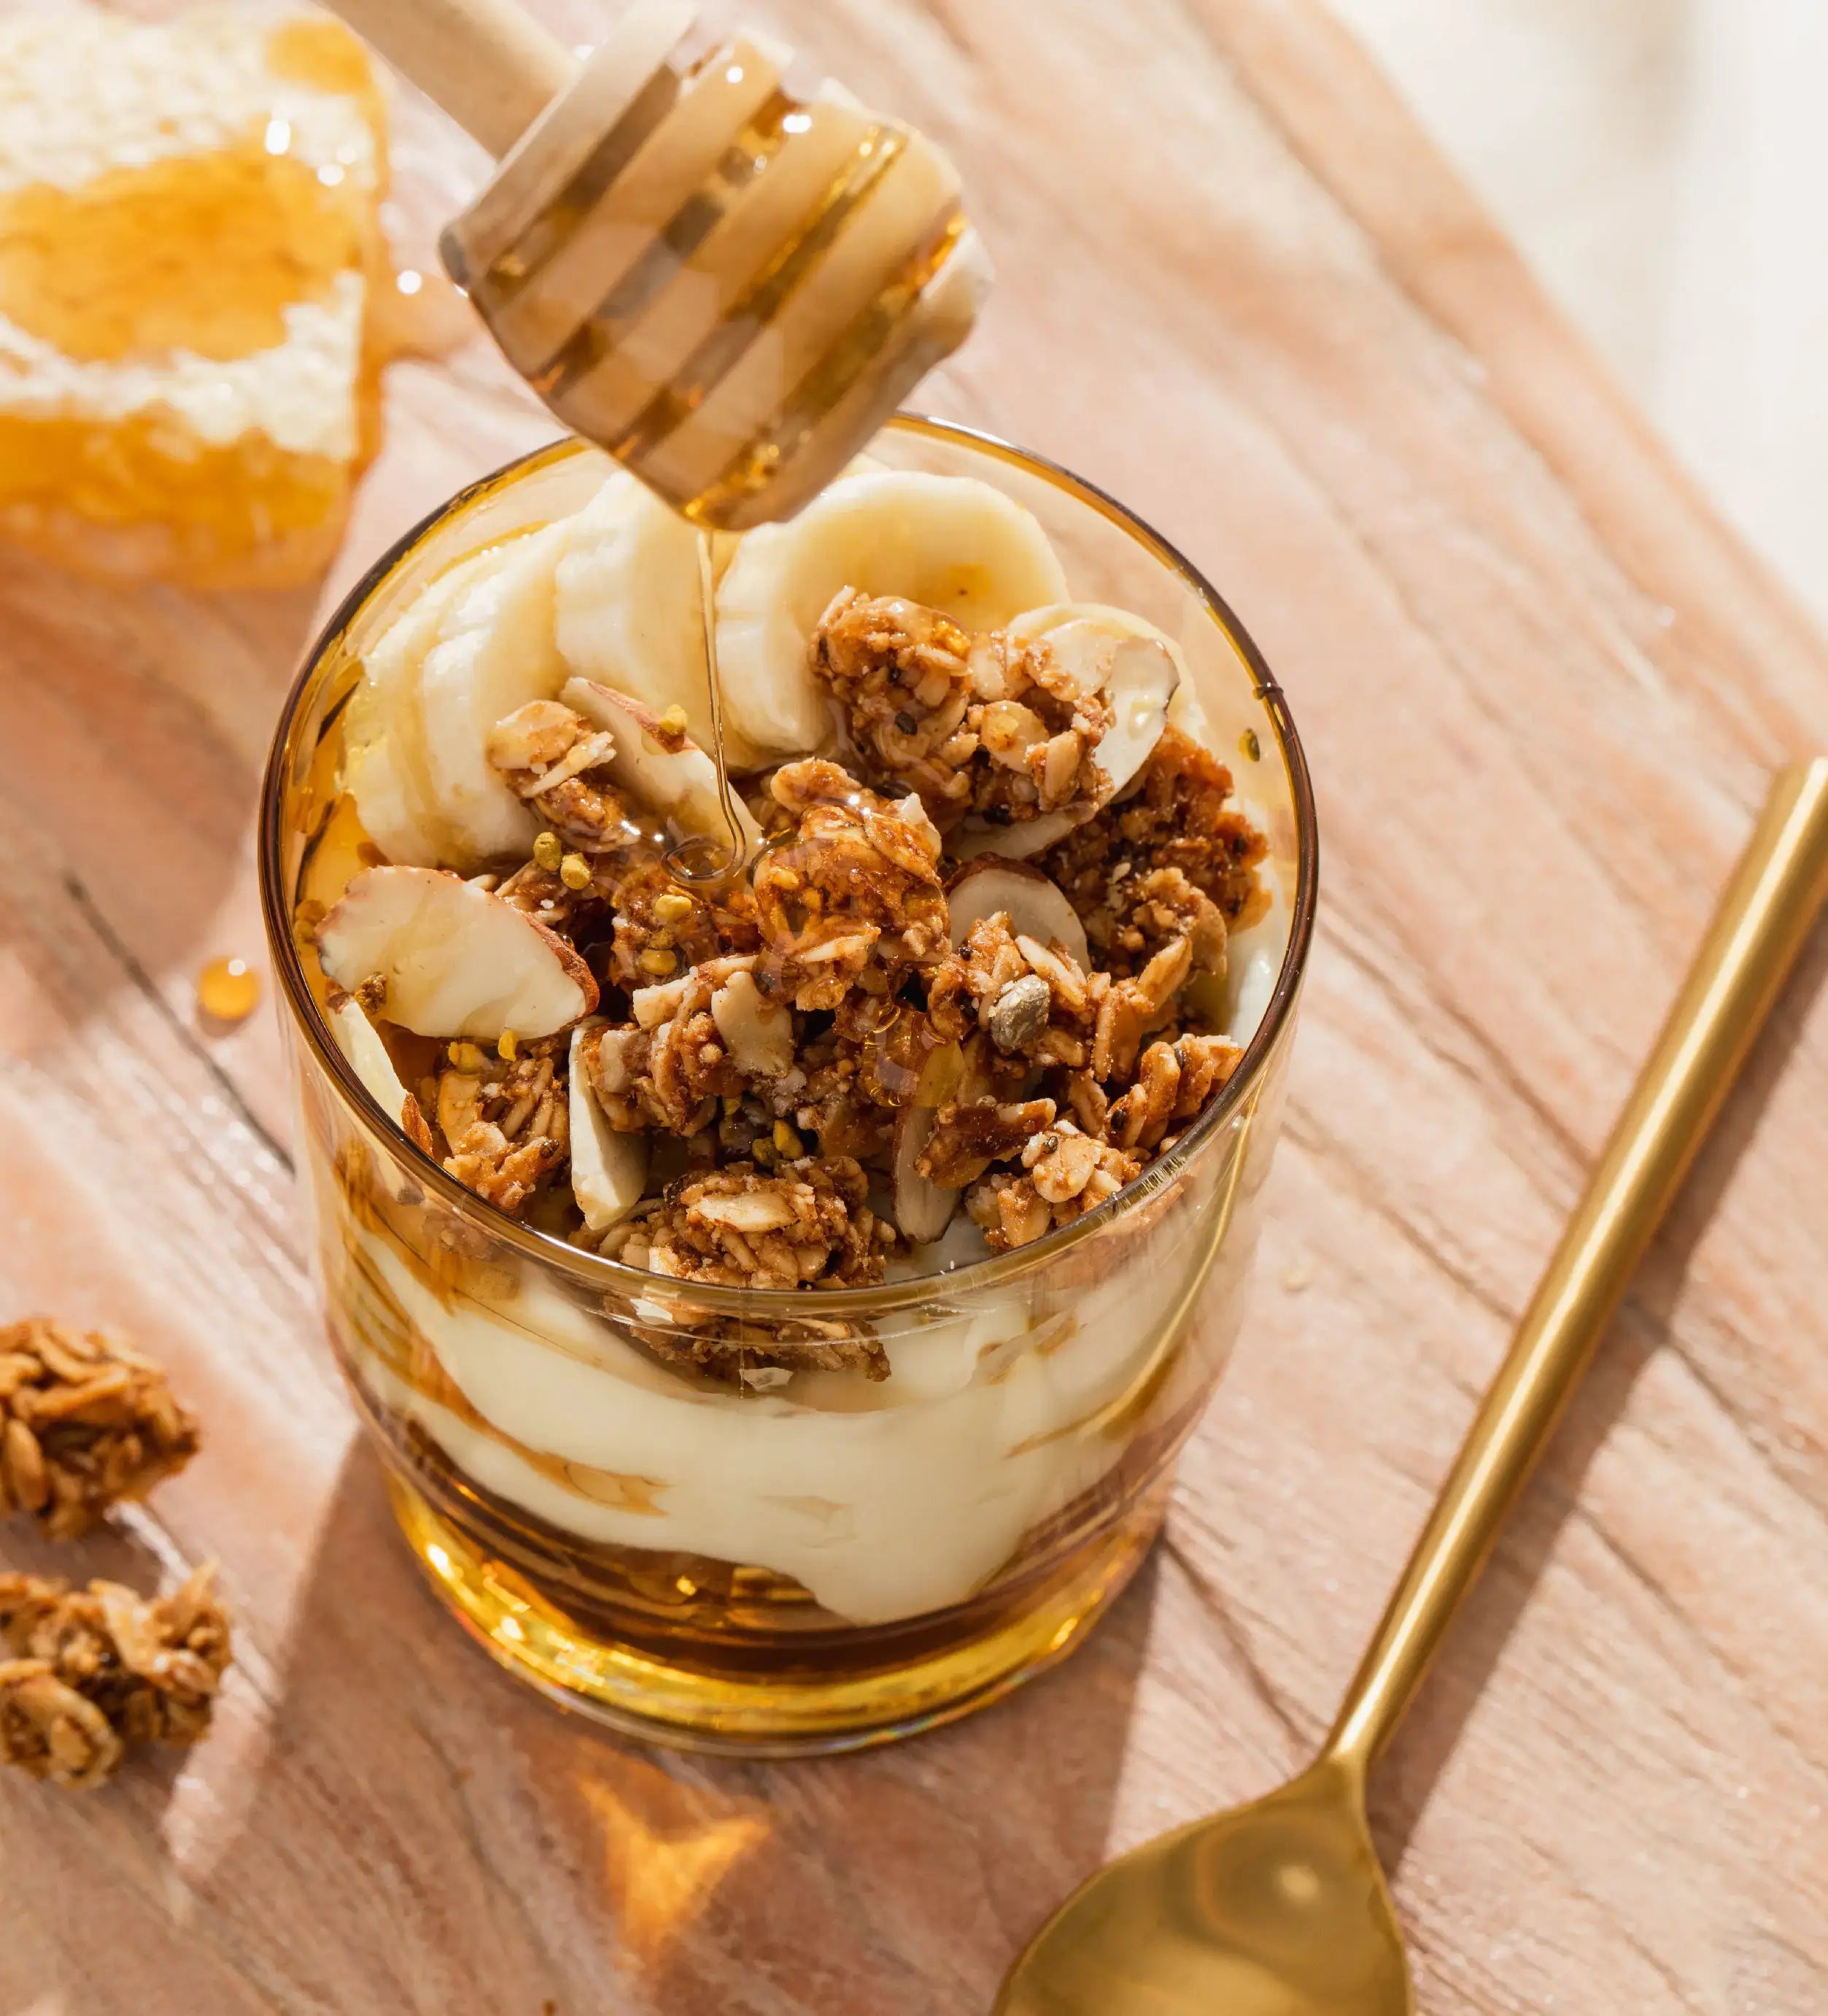 Honey Almond Probiotic Ancient Grain Granola